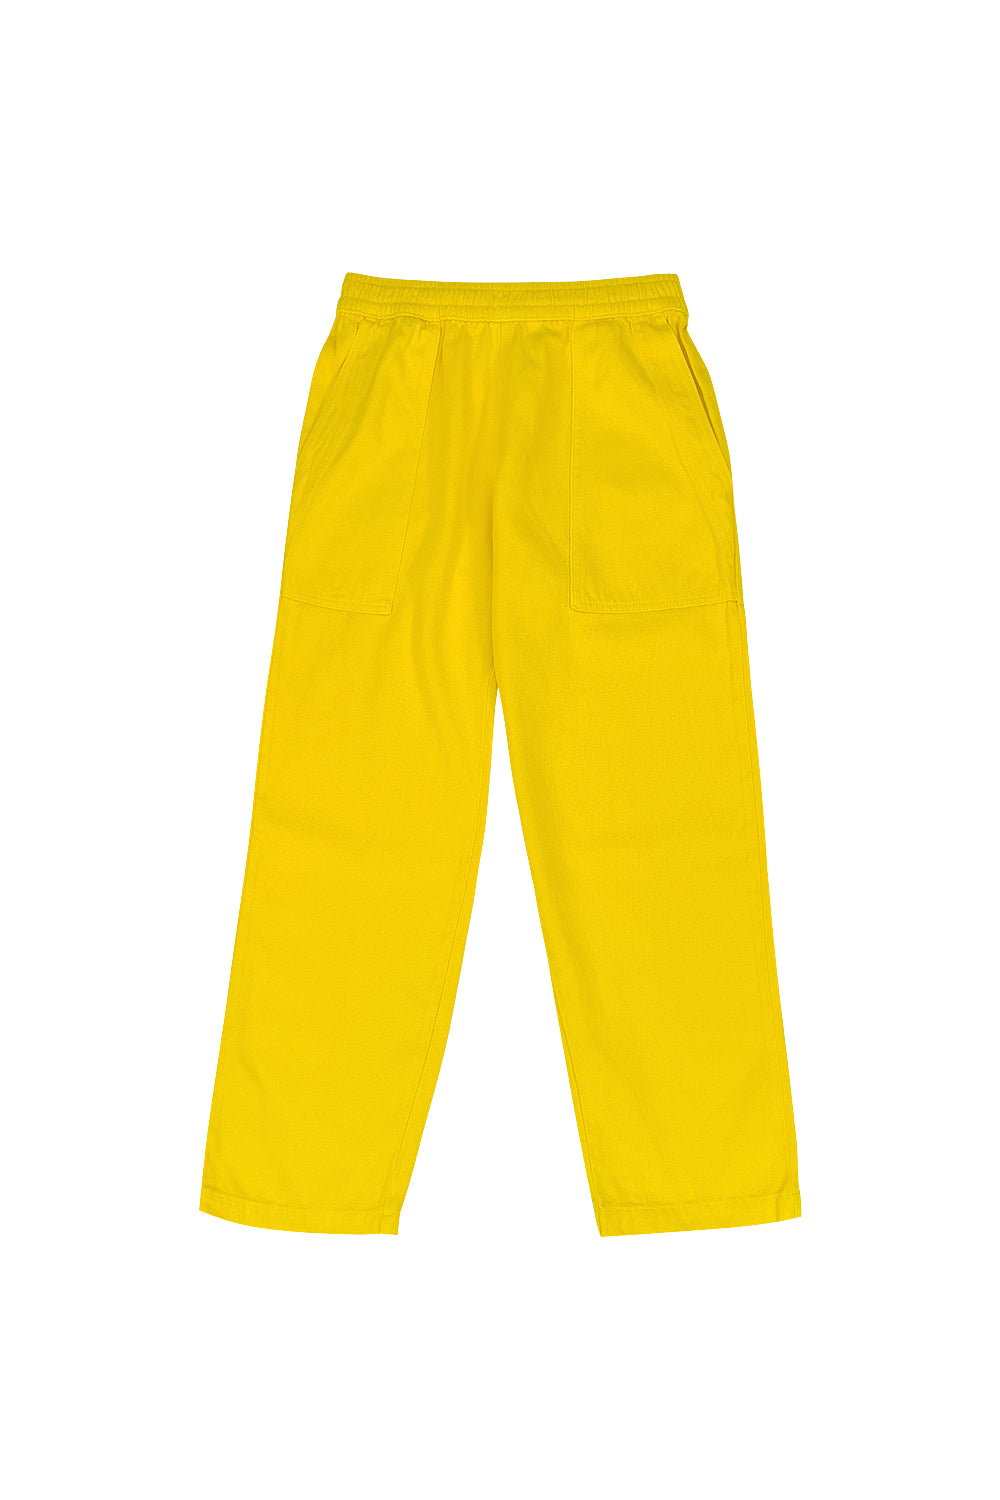 Ocean Pant | Jungmaven Hemp Clothing & Accessories / Color: Sunshine Yellow